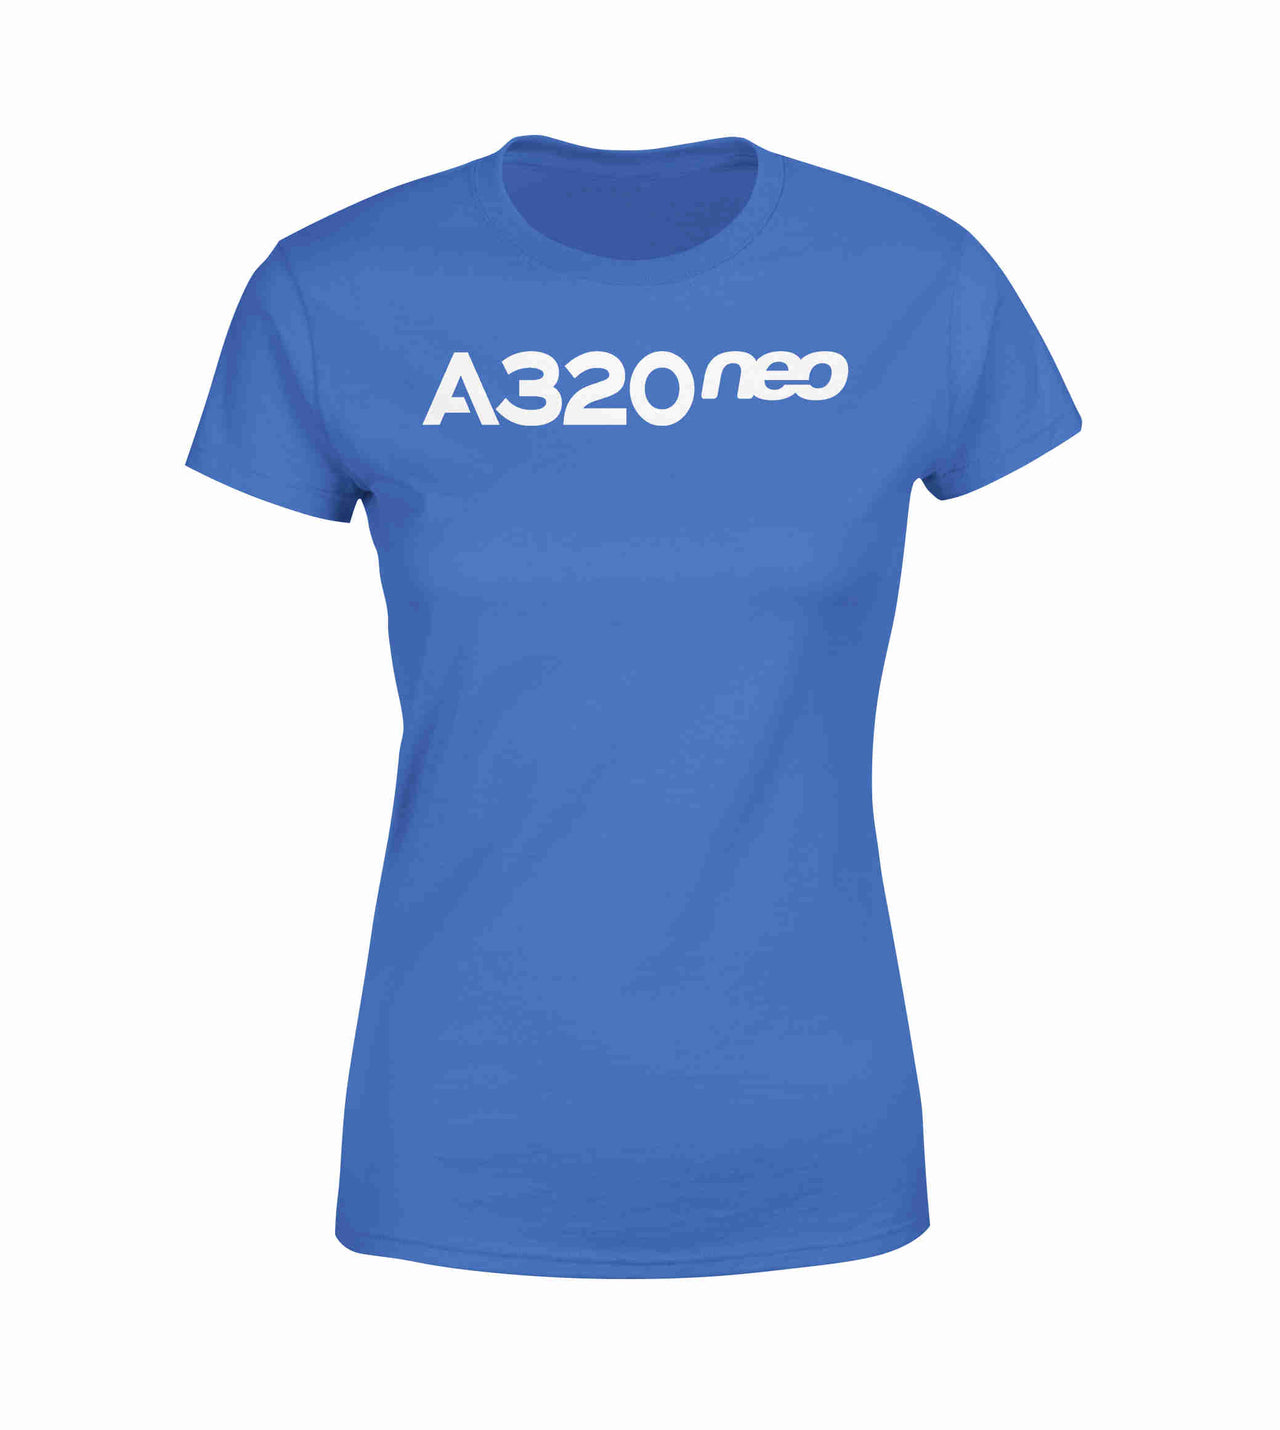 A320neo & Text Designed Women T-Shirts